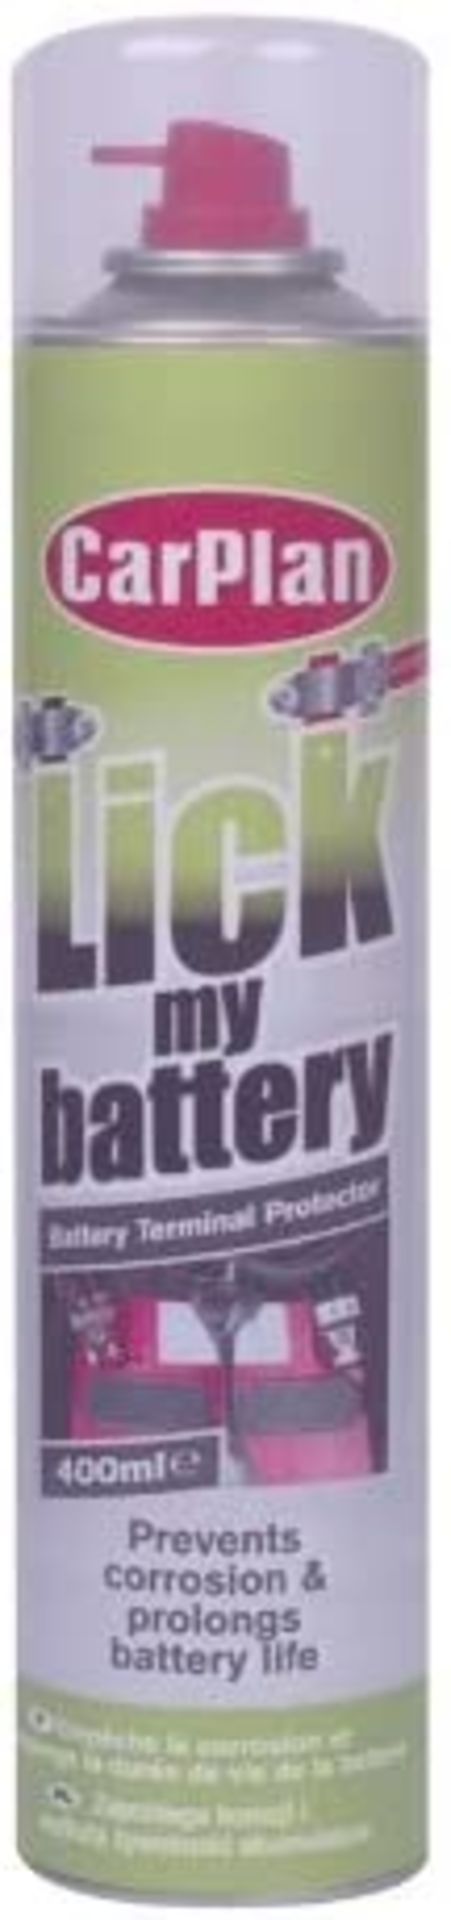 6 x CarPlan Lick My Battery 400ml - Amazon £12.97 ea.